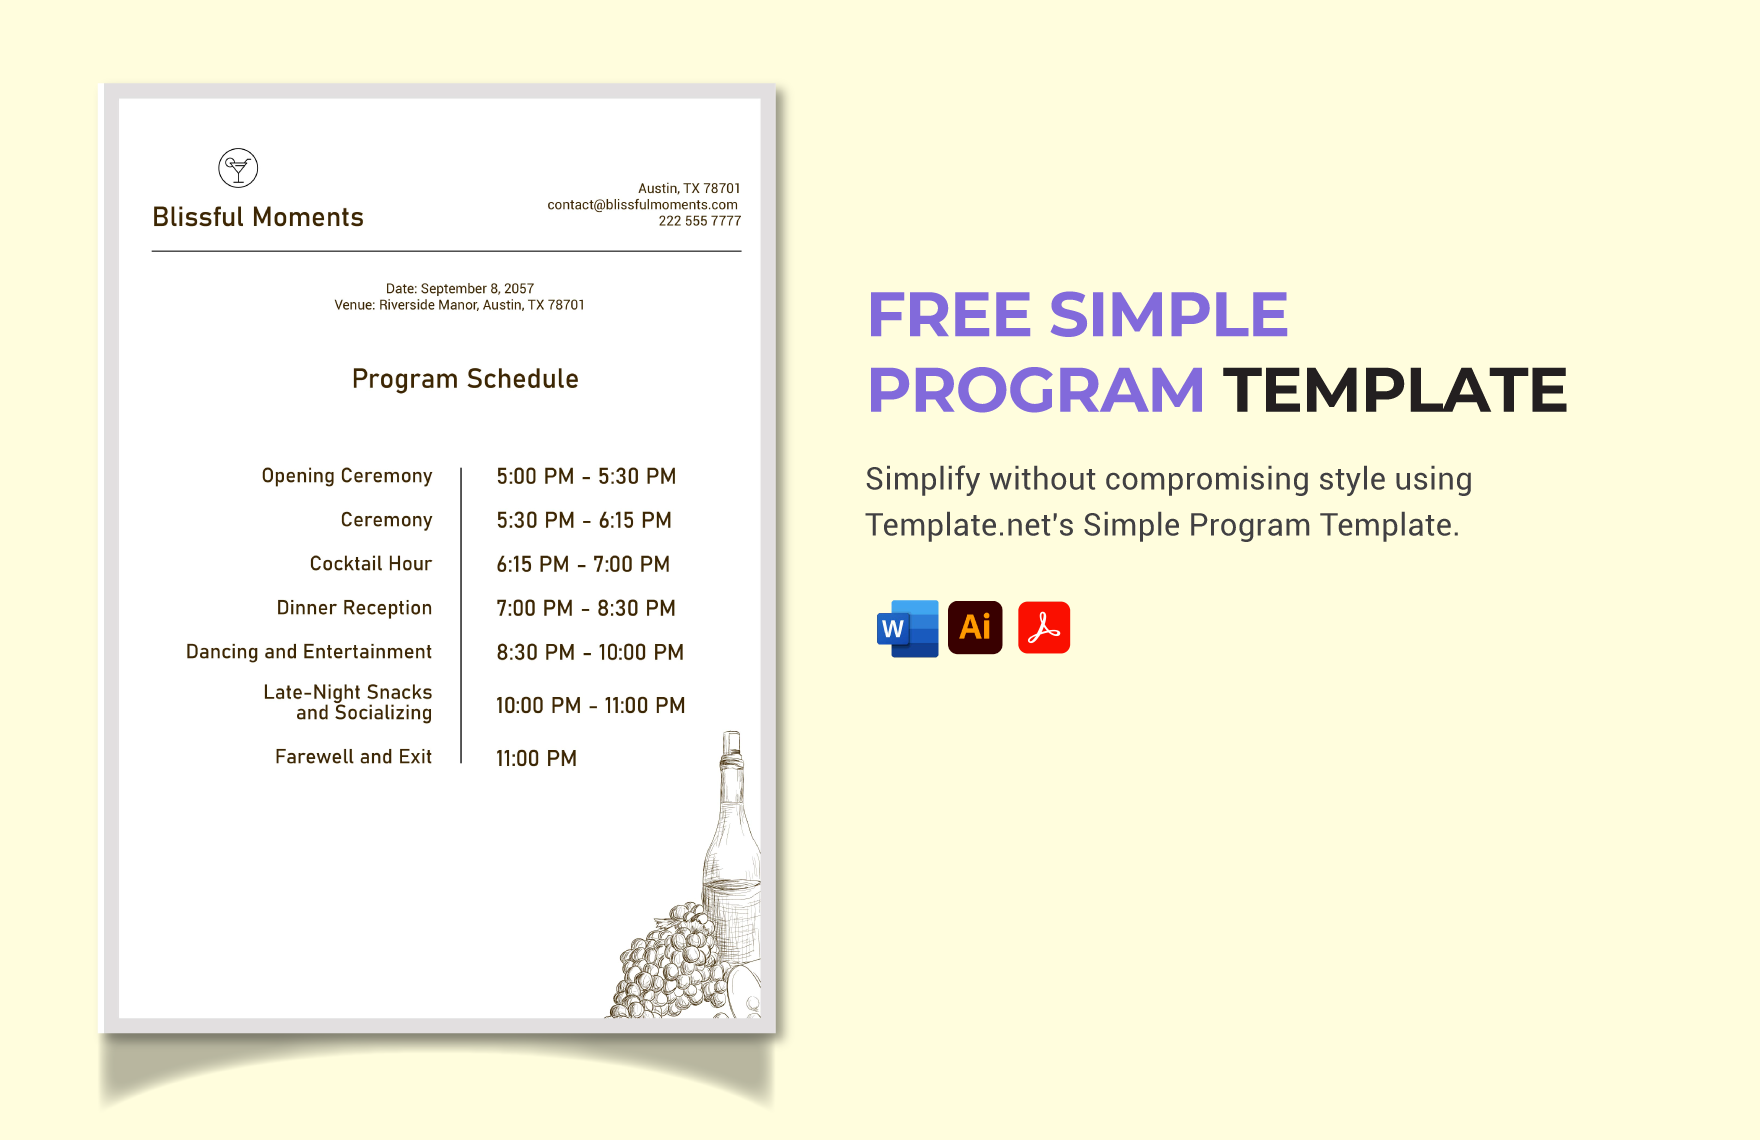 Free Simple Program Template